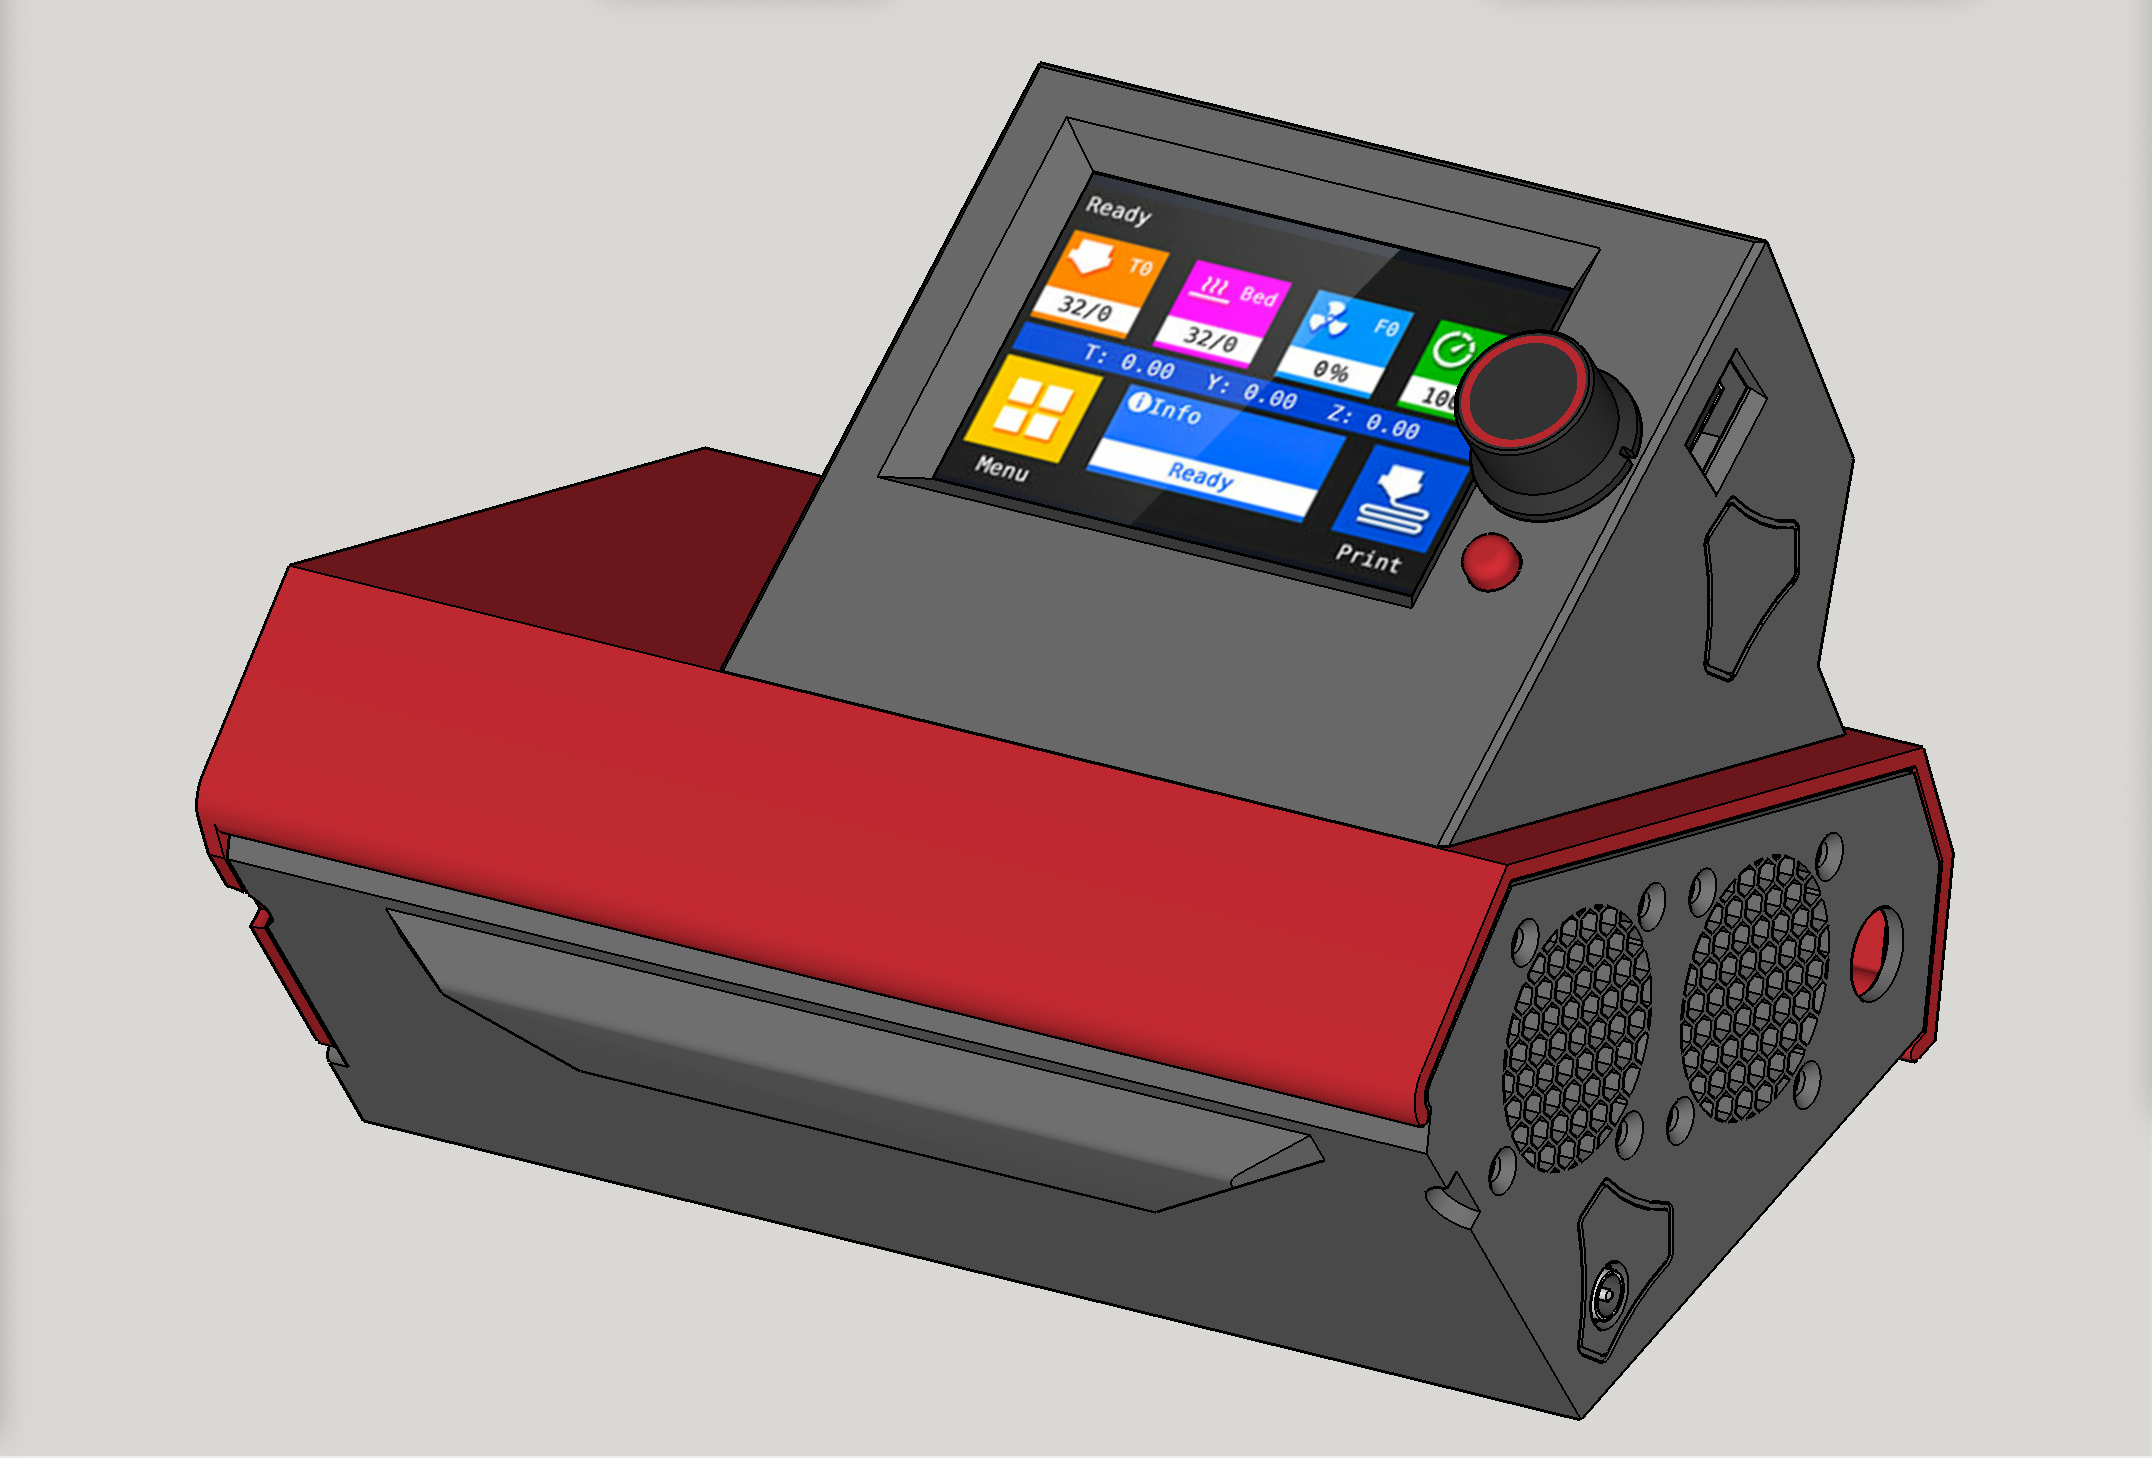 LowRider 3 CNC - control box case for BTT SKR Pro 1.2 board and a BTT TFT35 (NON-E3) touchscreen (v1.3.1)